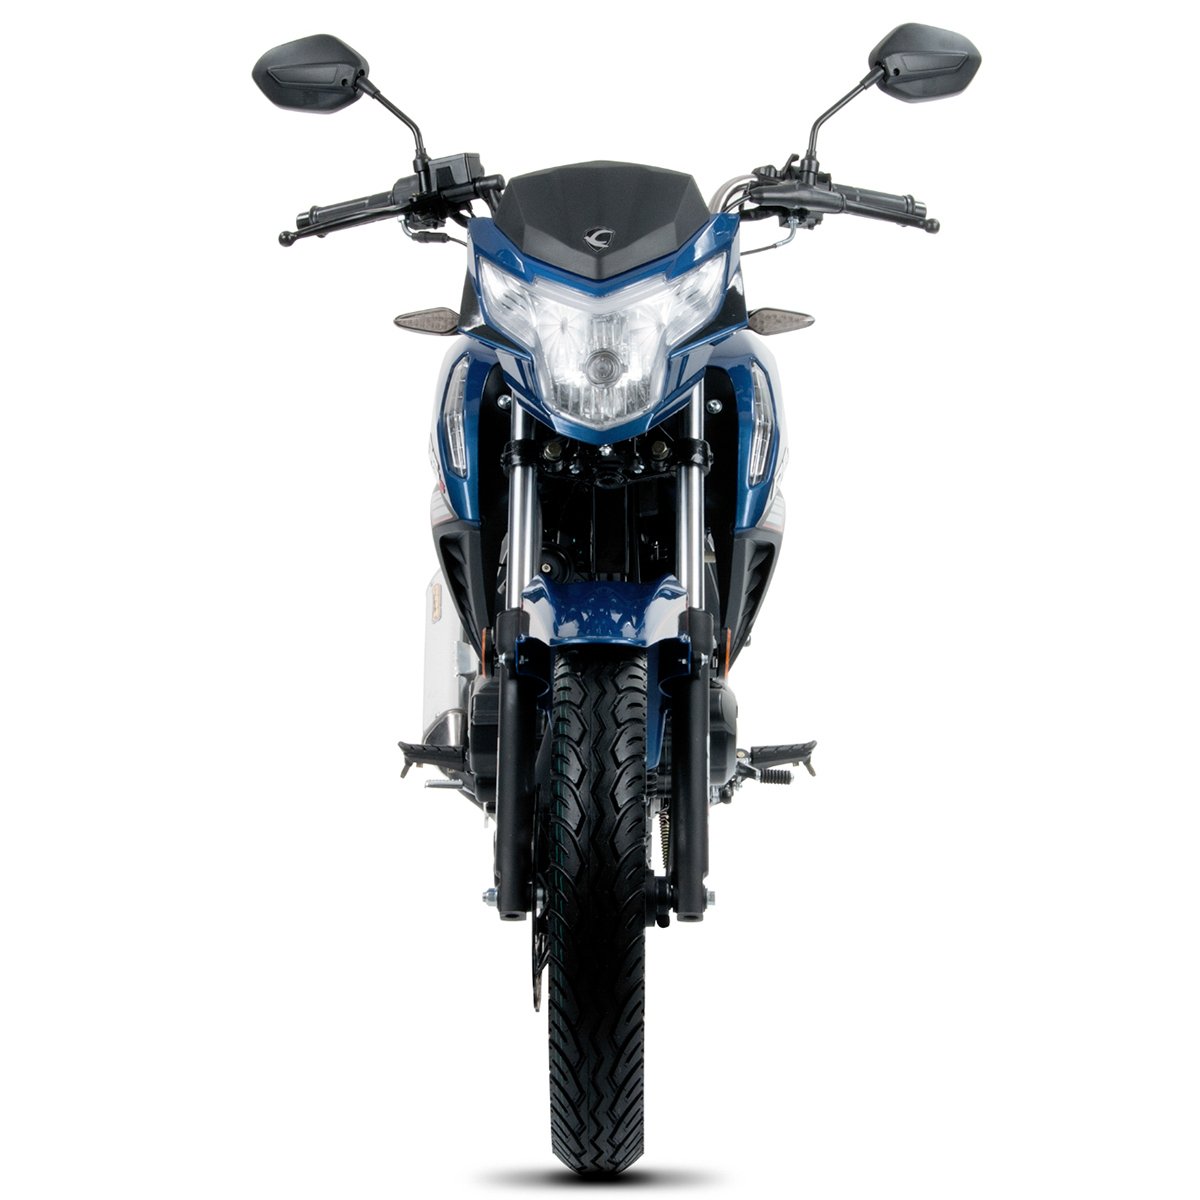 Motocicleta Car R6S 250Cc Azul 2021 Carabela